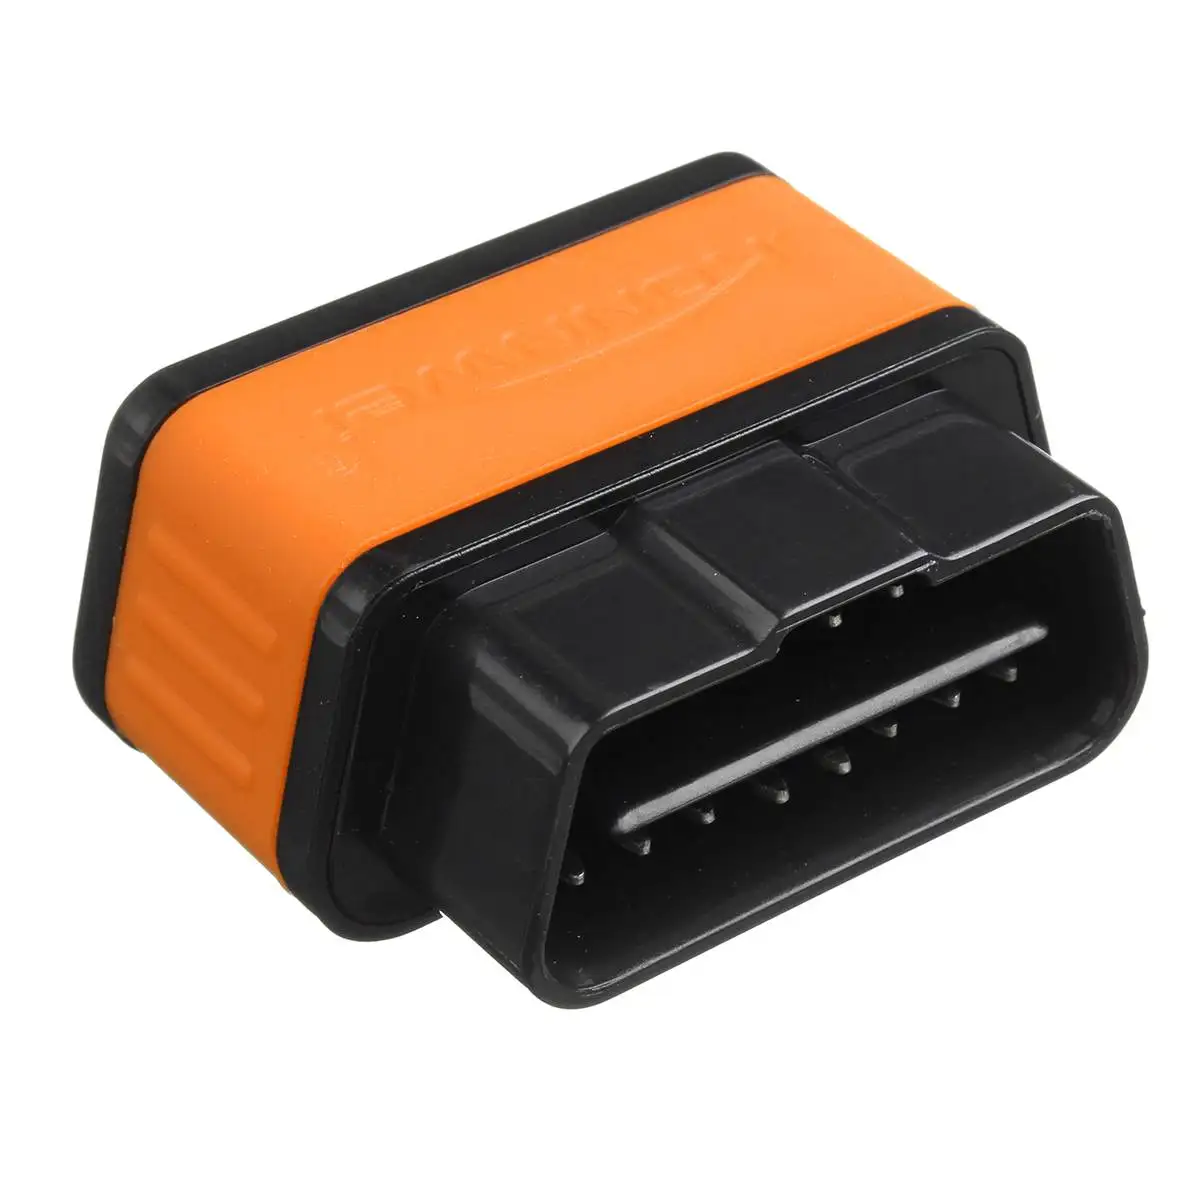 Wifi KW903 OBDII OBD2 автомобильный диагностический сканер считыватель bluetooth wifi инструмент-сканер бортовой диагностики для IOS Android - Цвет: black orange